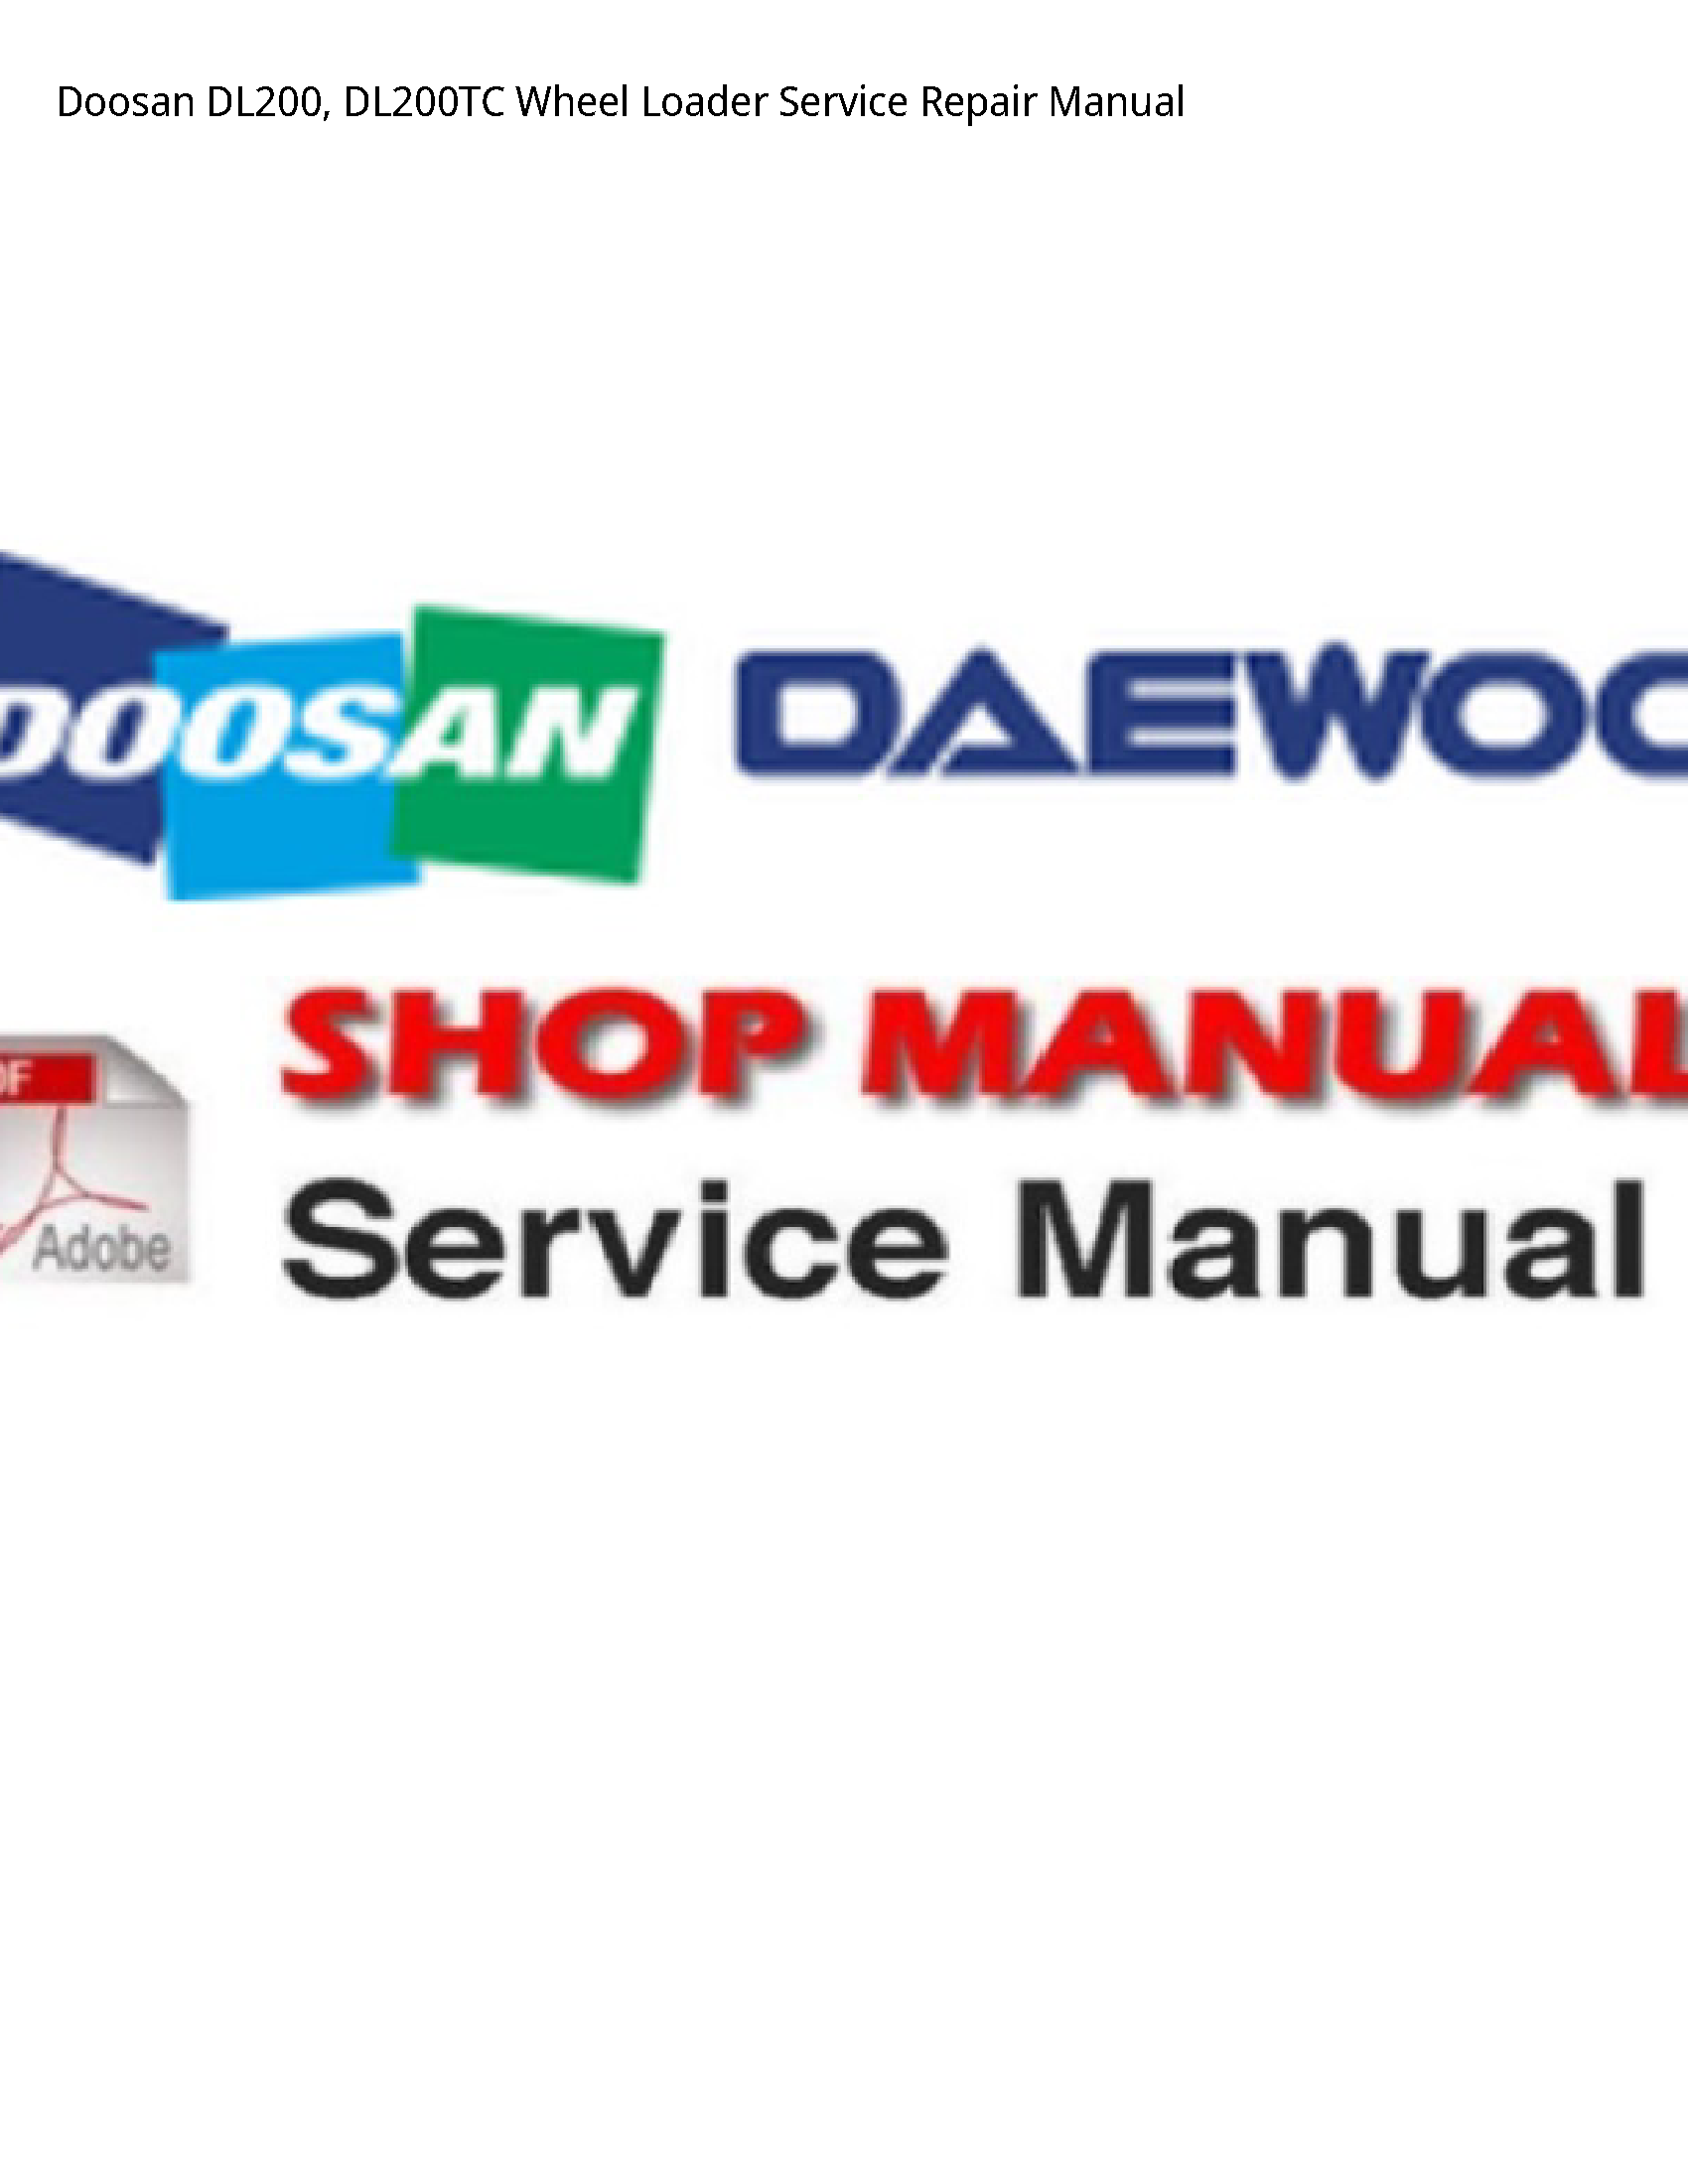 Doosan DL200 Wheel Loader manual